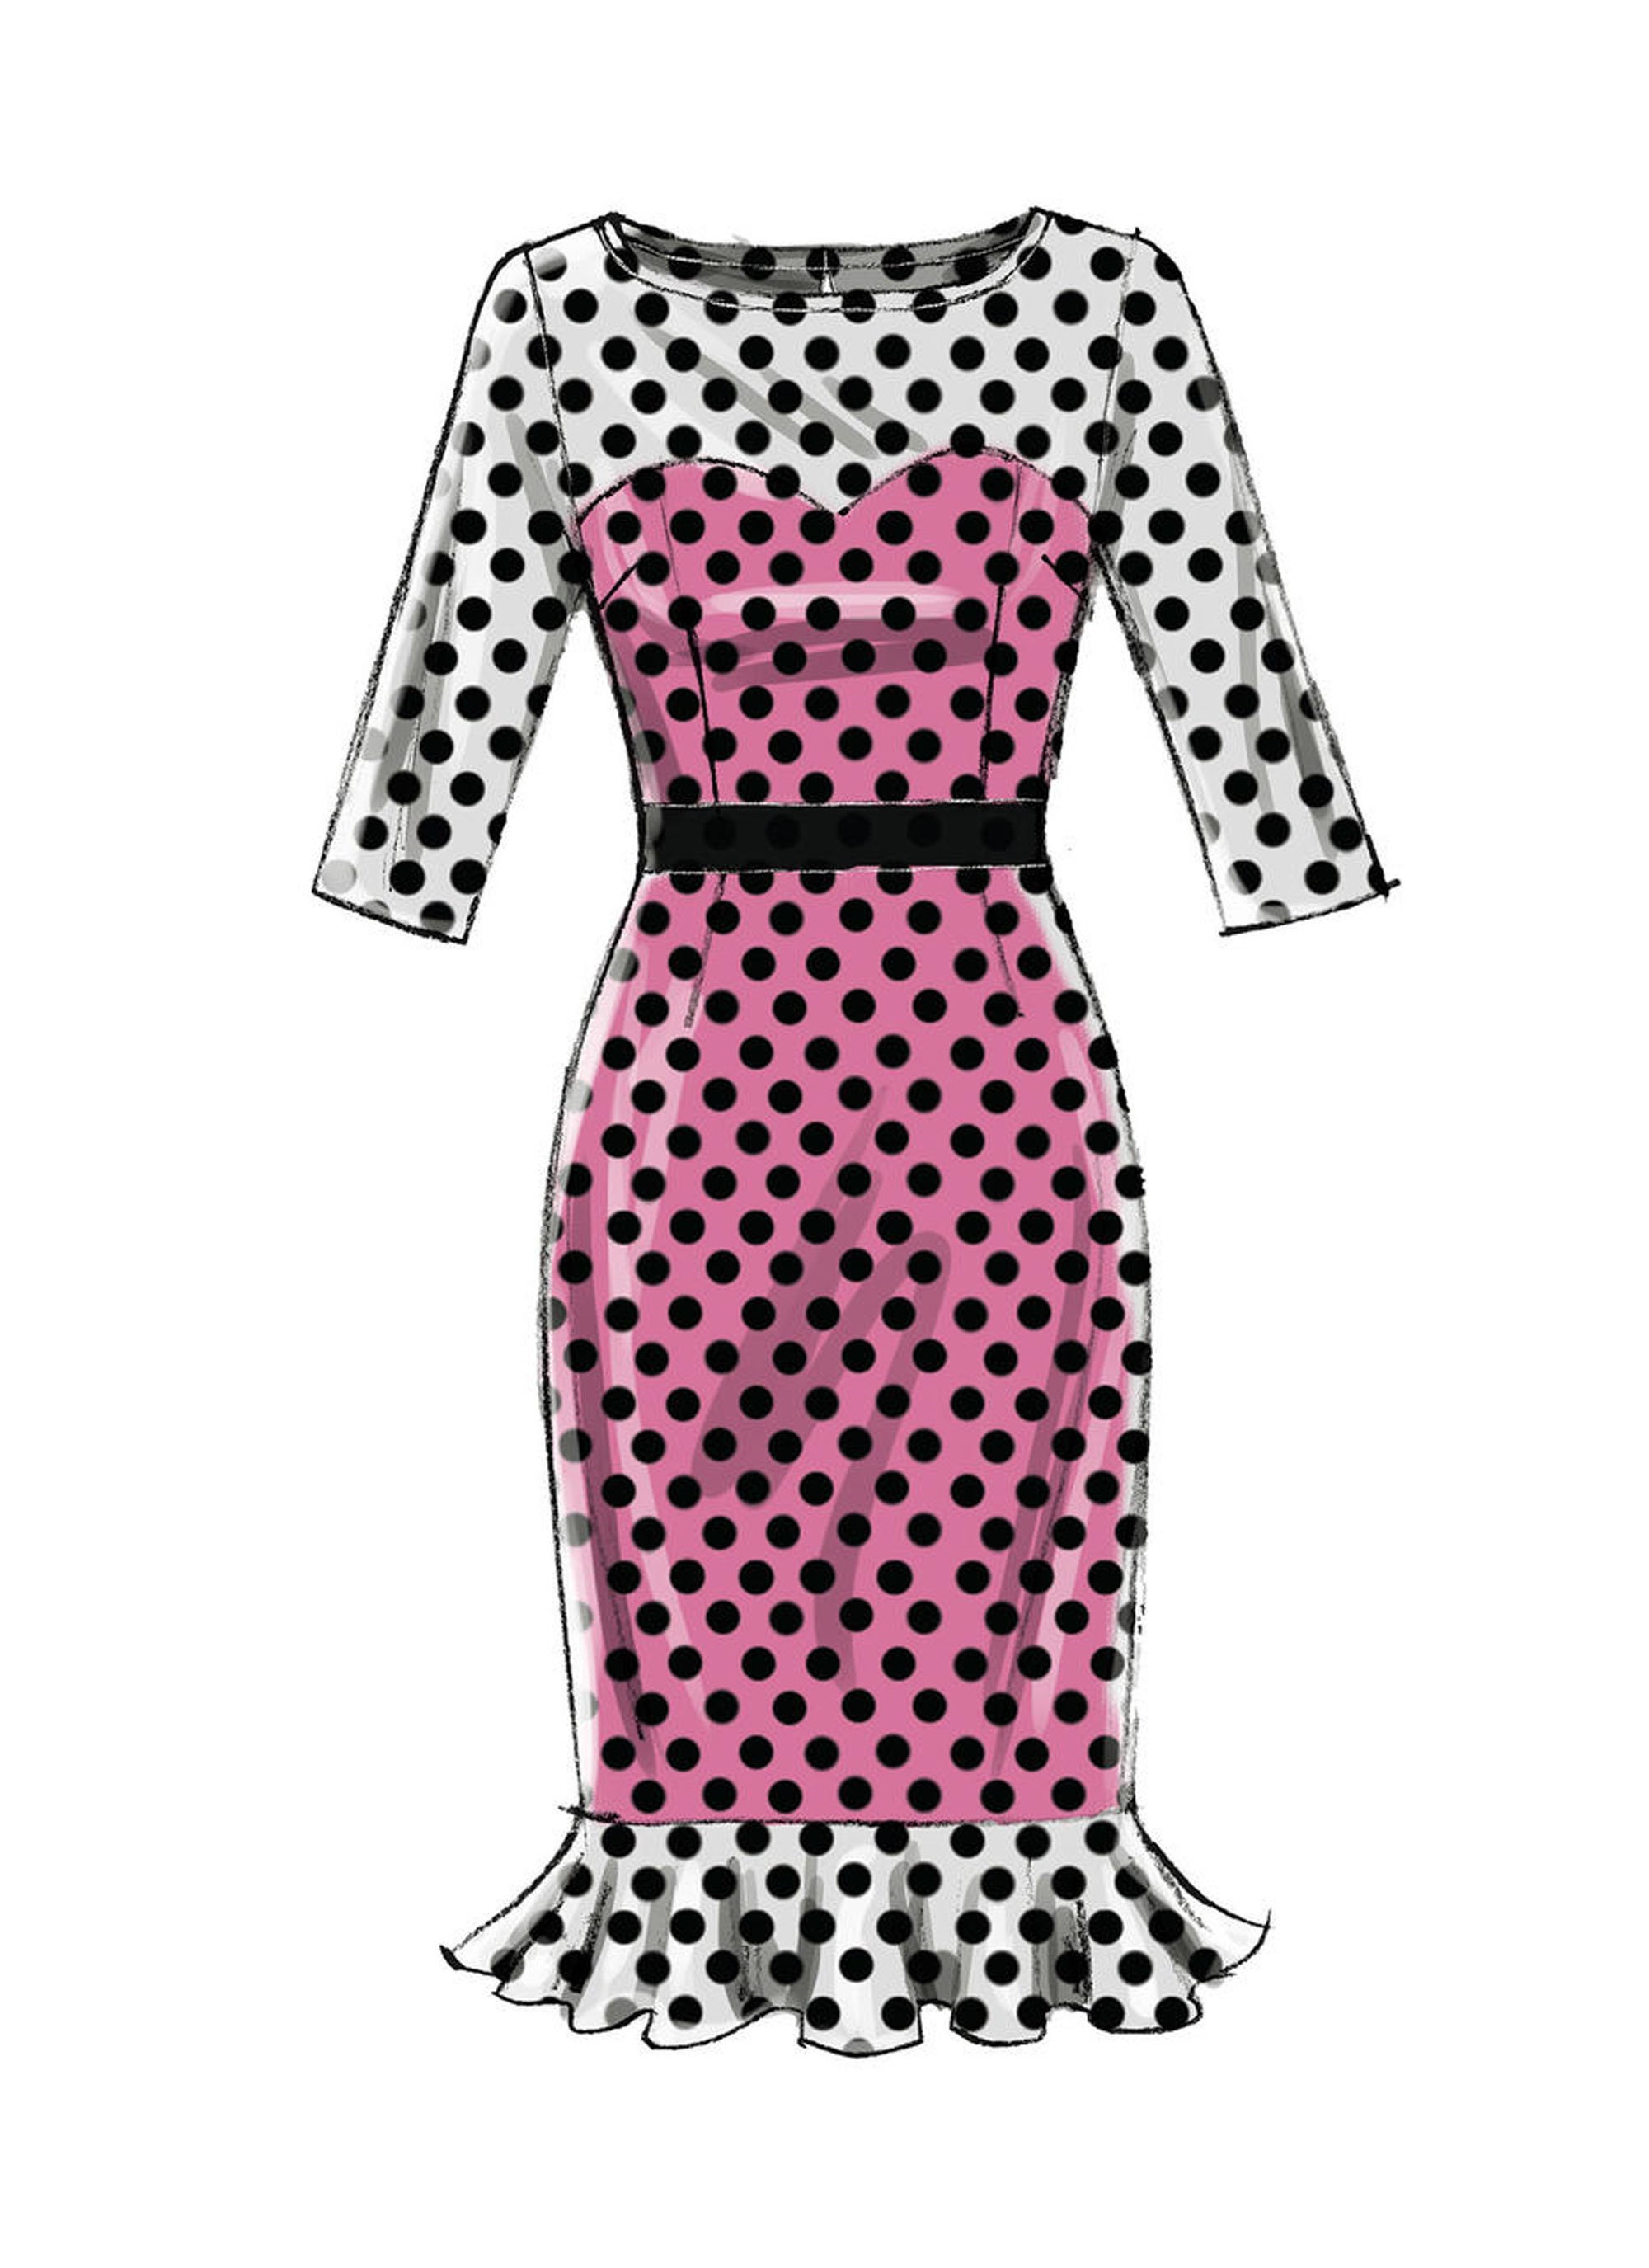 Misses Formal Dresses Sewing Pattern McCalls M6893 Size 8-14 | Etsy